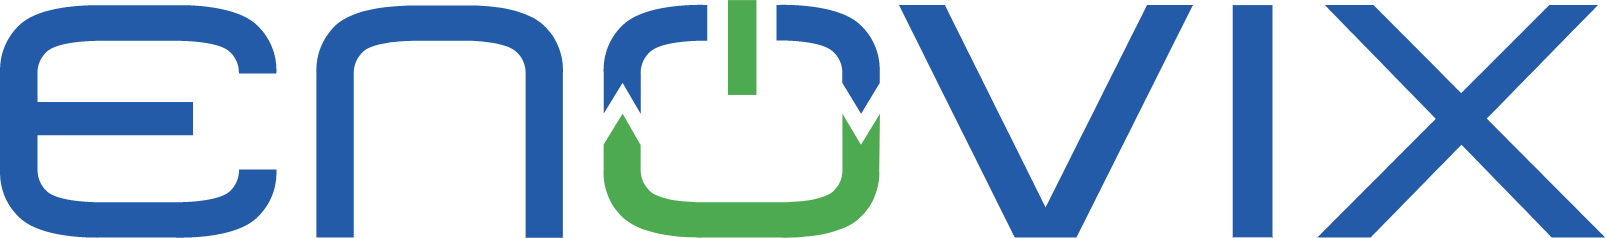 Enovix logo large (transparent PNG)